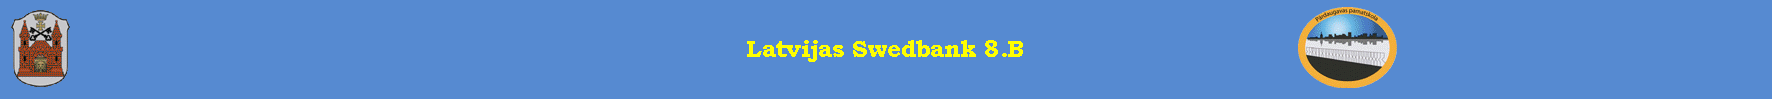 Latvijas Swedbank 8.B